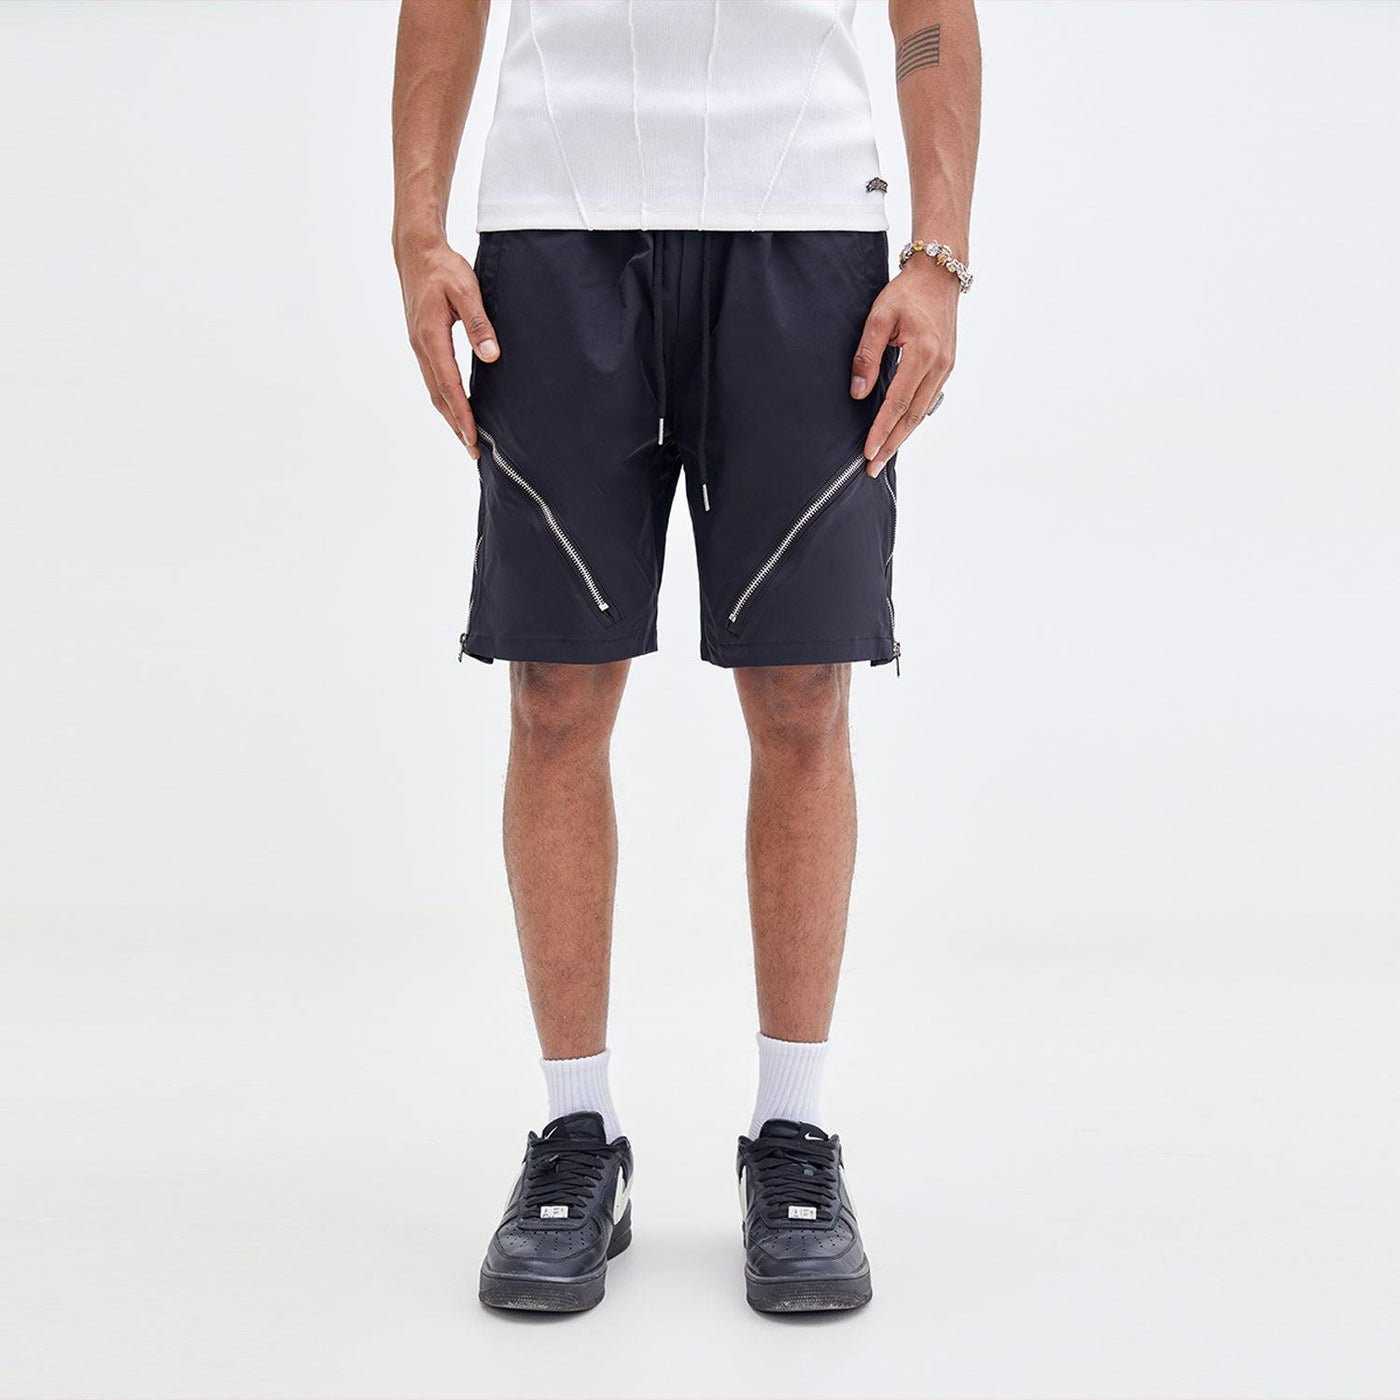 Made Extreme Drawstring Zip Pocket Shorts Korean Street Fashion Shorts By Made Extreme Shop Online at OH Vault